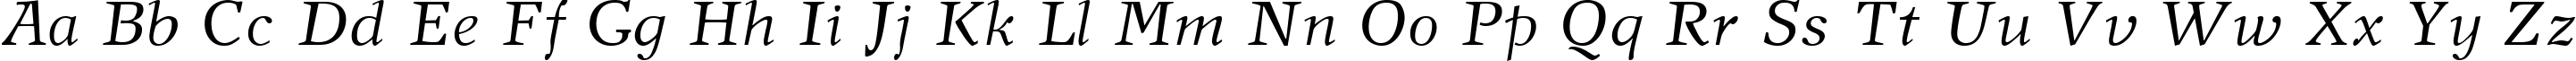 Пример написания английского алфавита шрифтом New Journal Italic:001.001